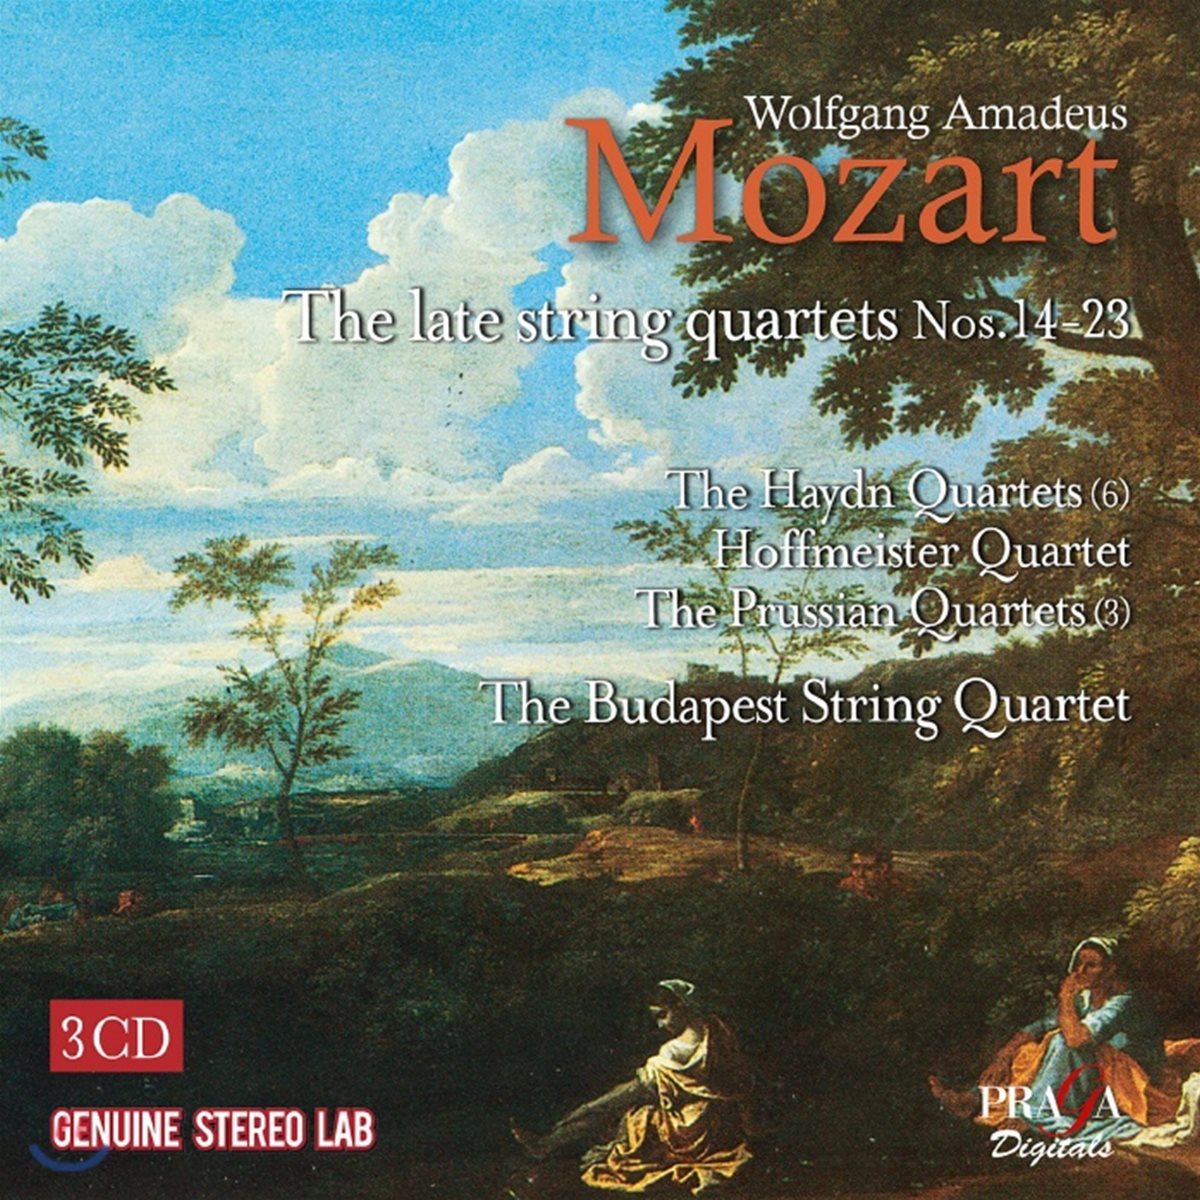 Budapest String Quartet 모차르트: 후기 현악 사중주집 14-23번 - 하이든, 호프마이스터, 프러시안 (Mozart: The Late String Quartets)